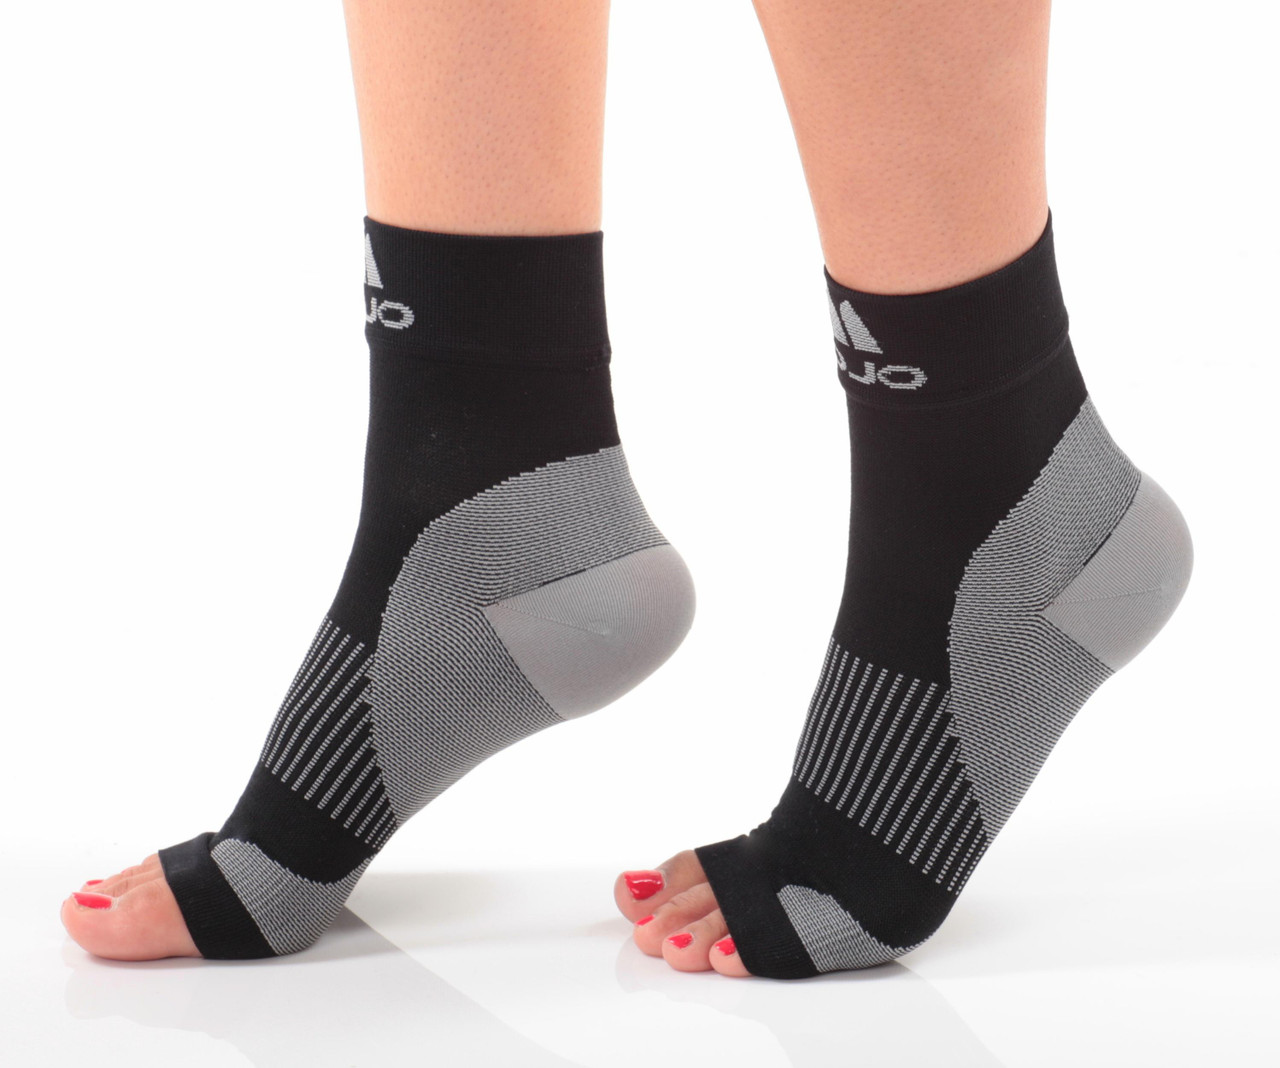 ZenToes Unisex Plantar Fasciitis Compression Socks with Open Toe